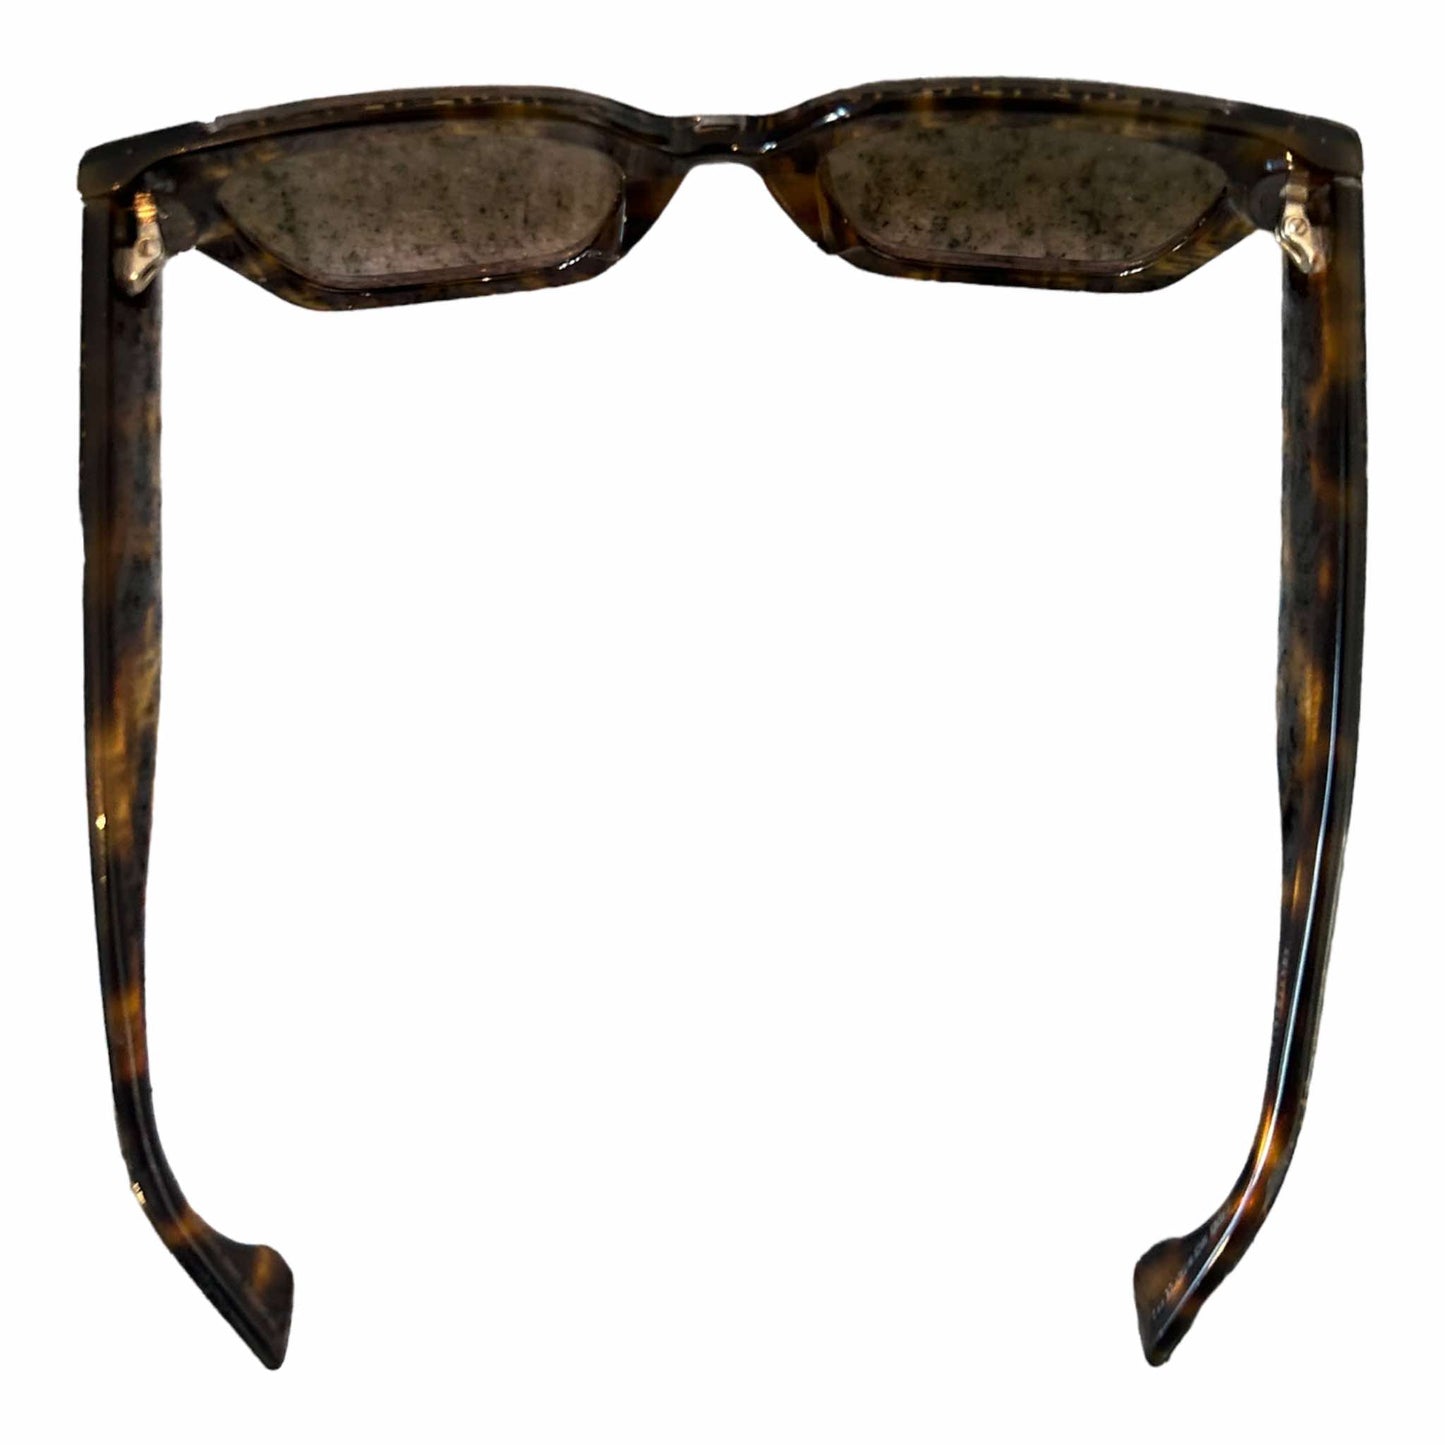 Fendi FF Monogram Sunglasses